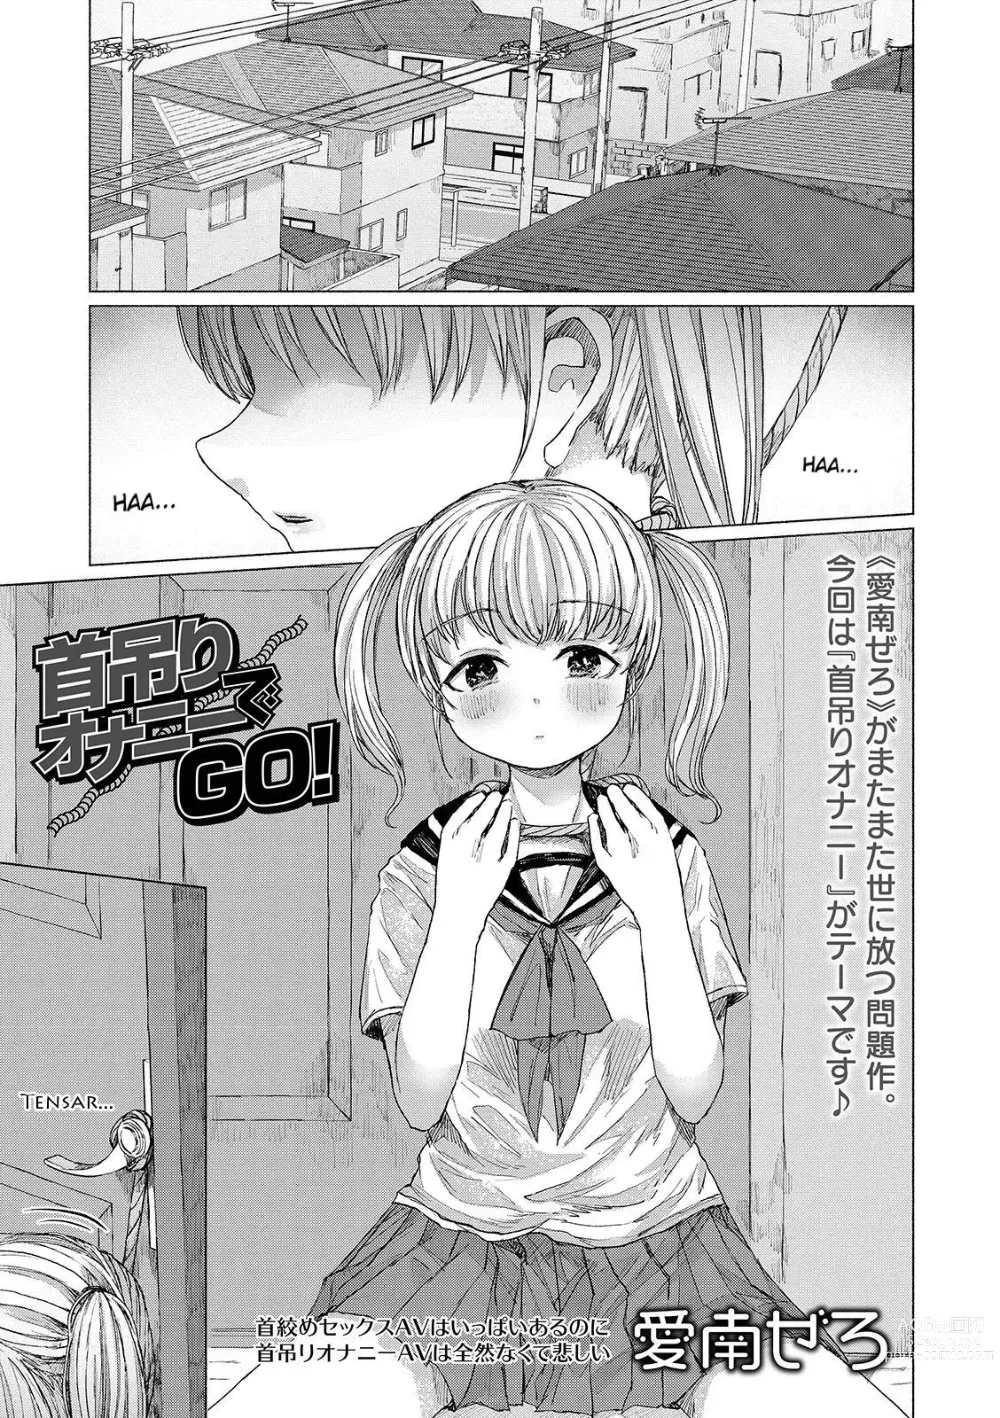 Page 1 of manga Kubitsuri Onanie de GO!